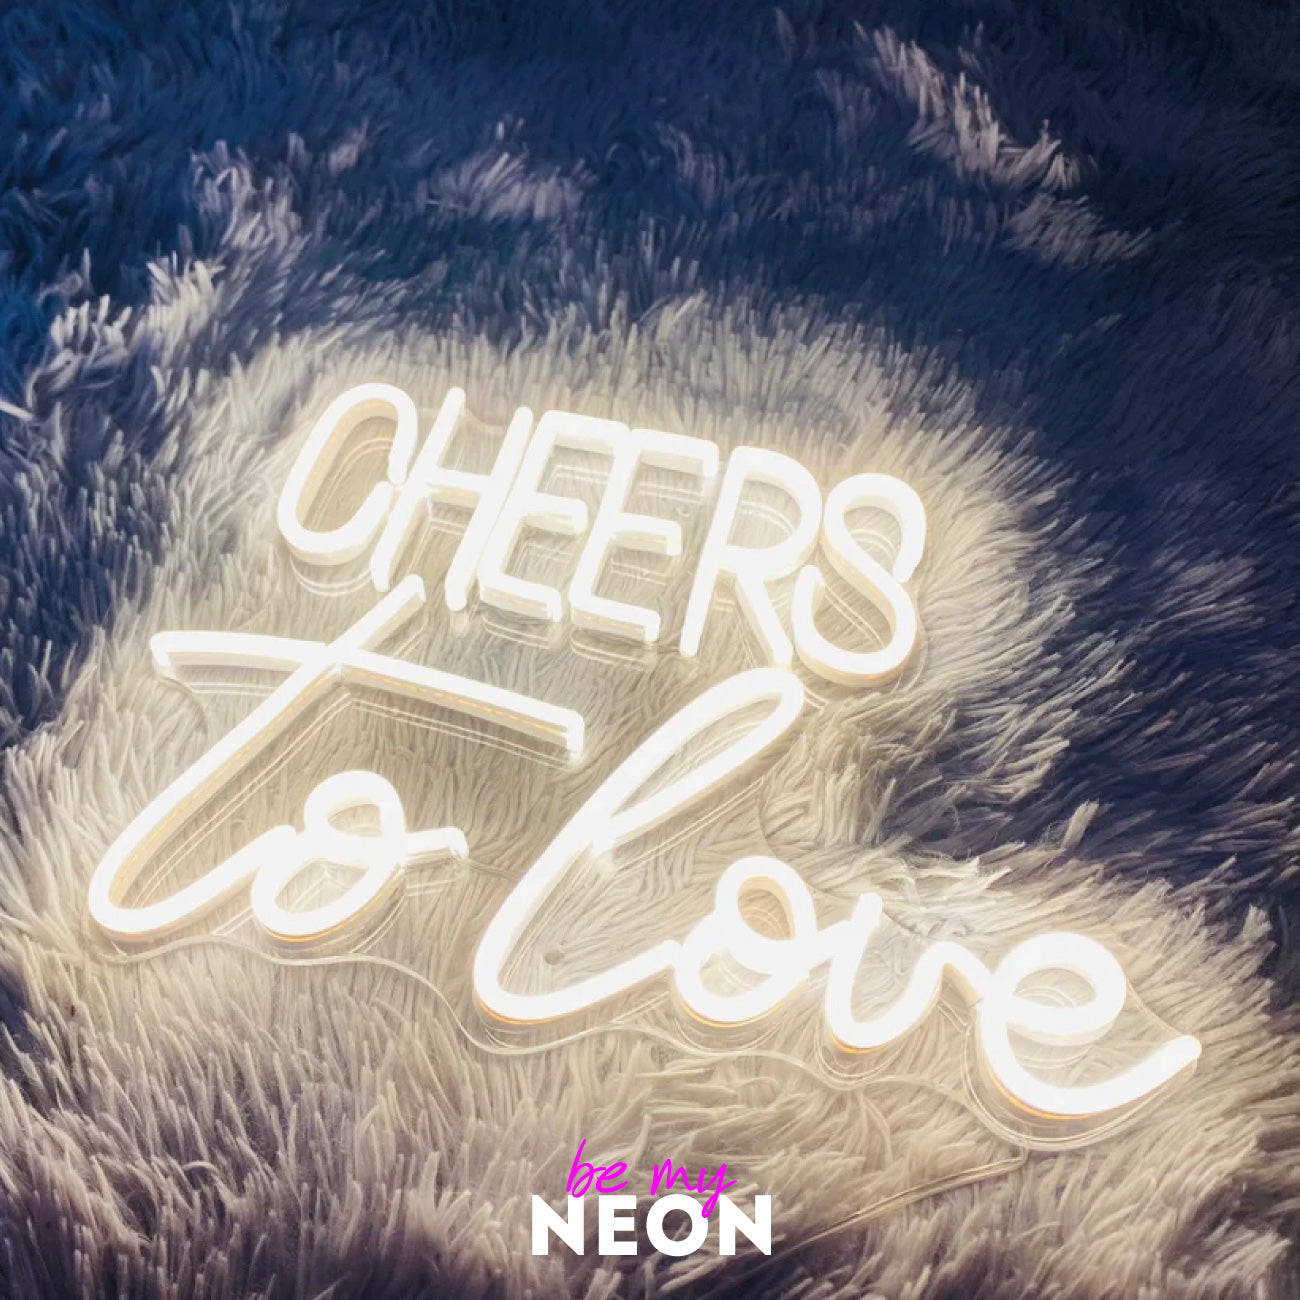 "Cheers to love" LED Neonschild